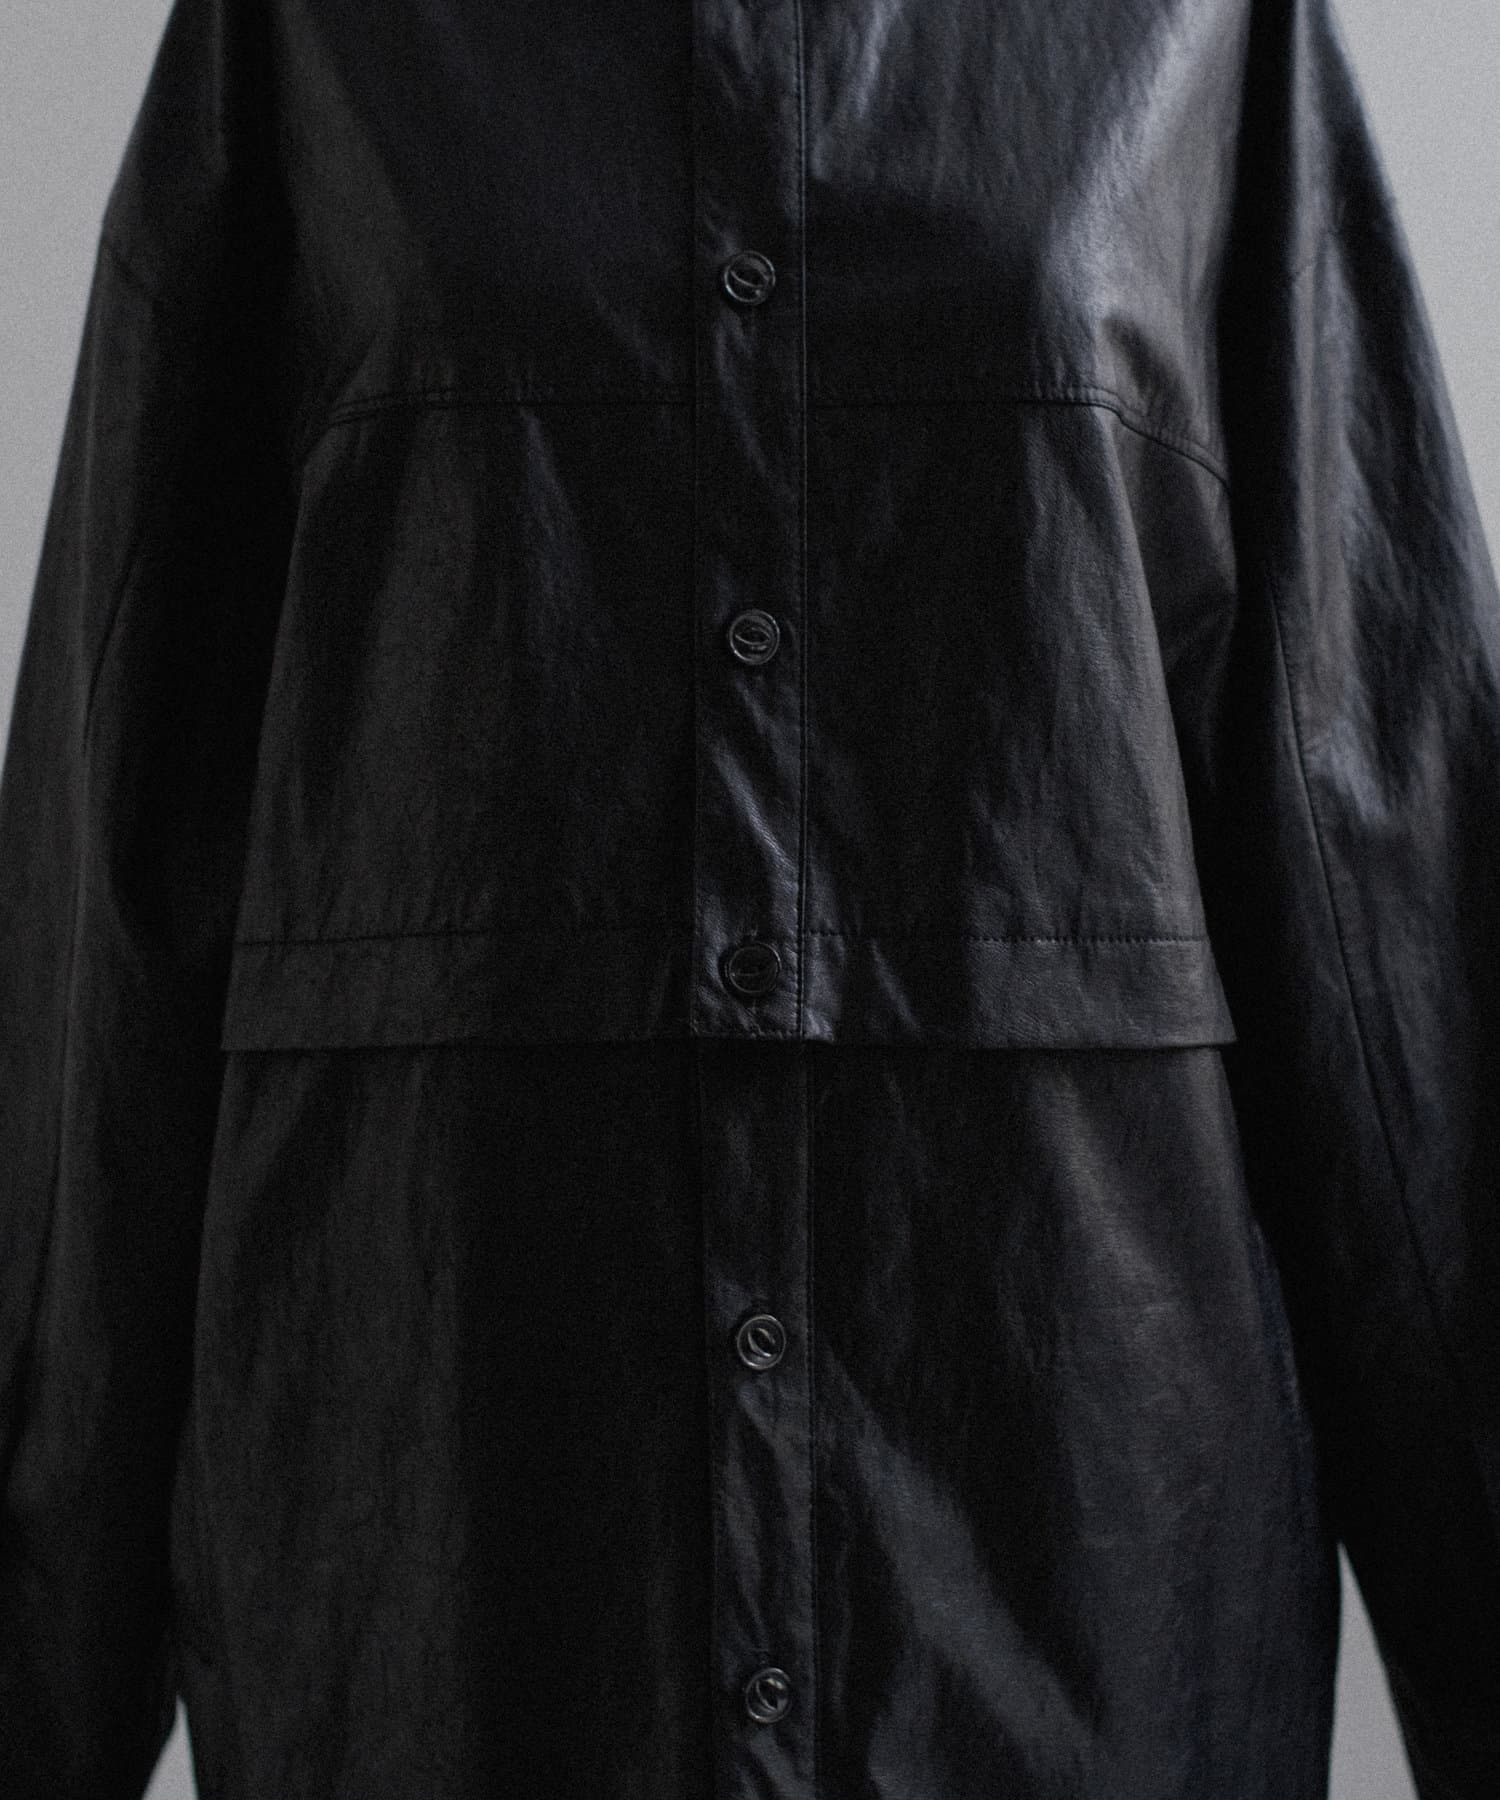 Pasterip(パセリ) Detachable fake leather coat